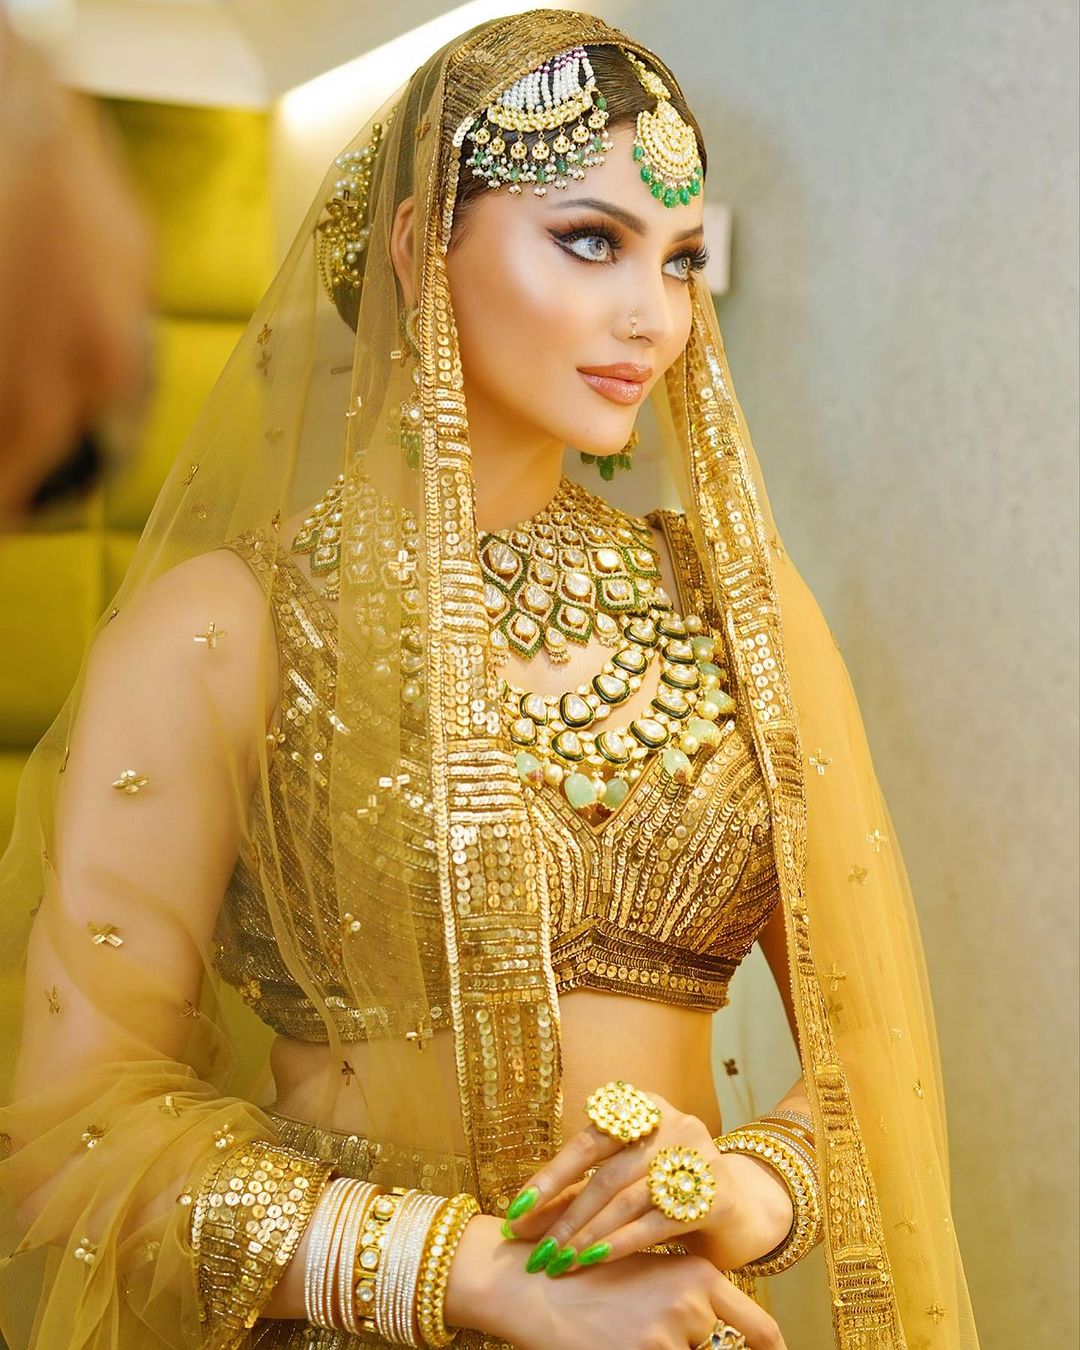 Urvashi Rautela Dons A Bridal Look Stuns In A Golden Hued Lehenga Choli With Heavy Jewellery